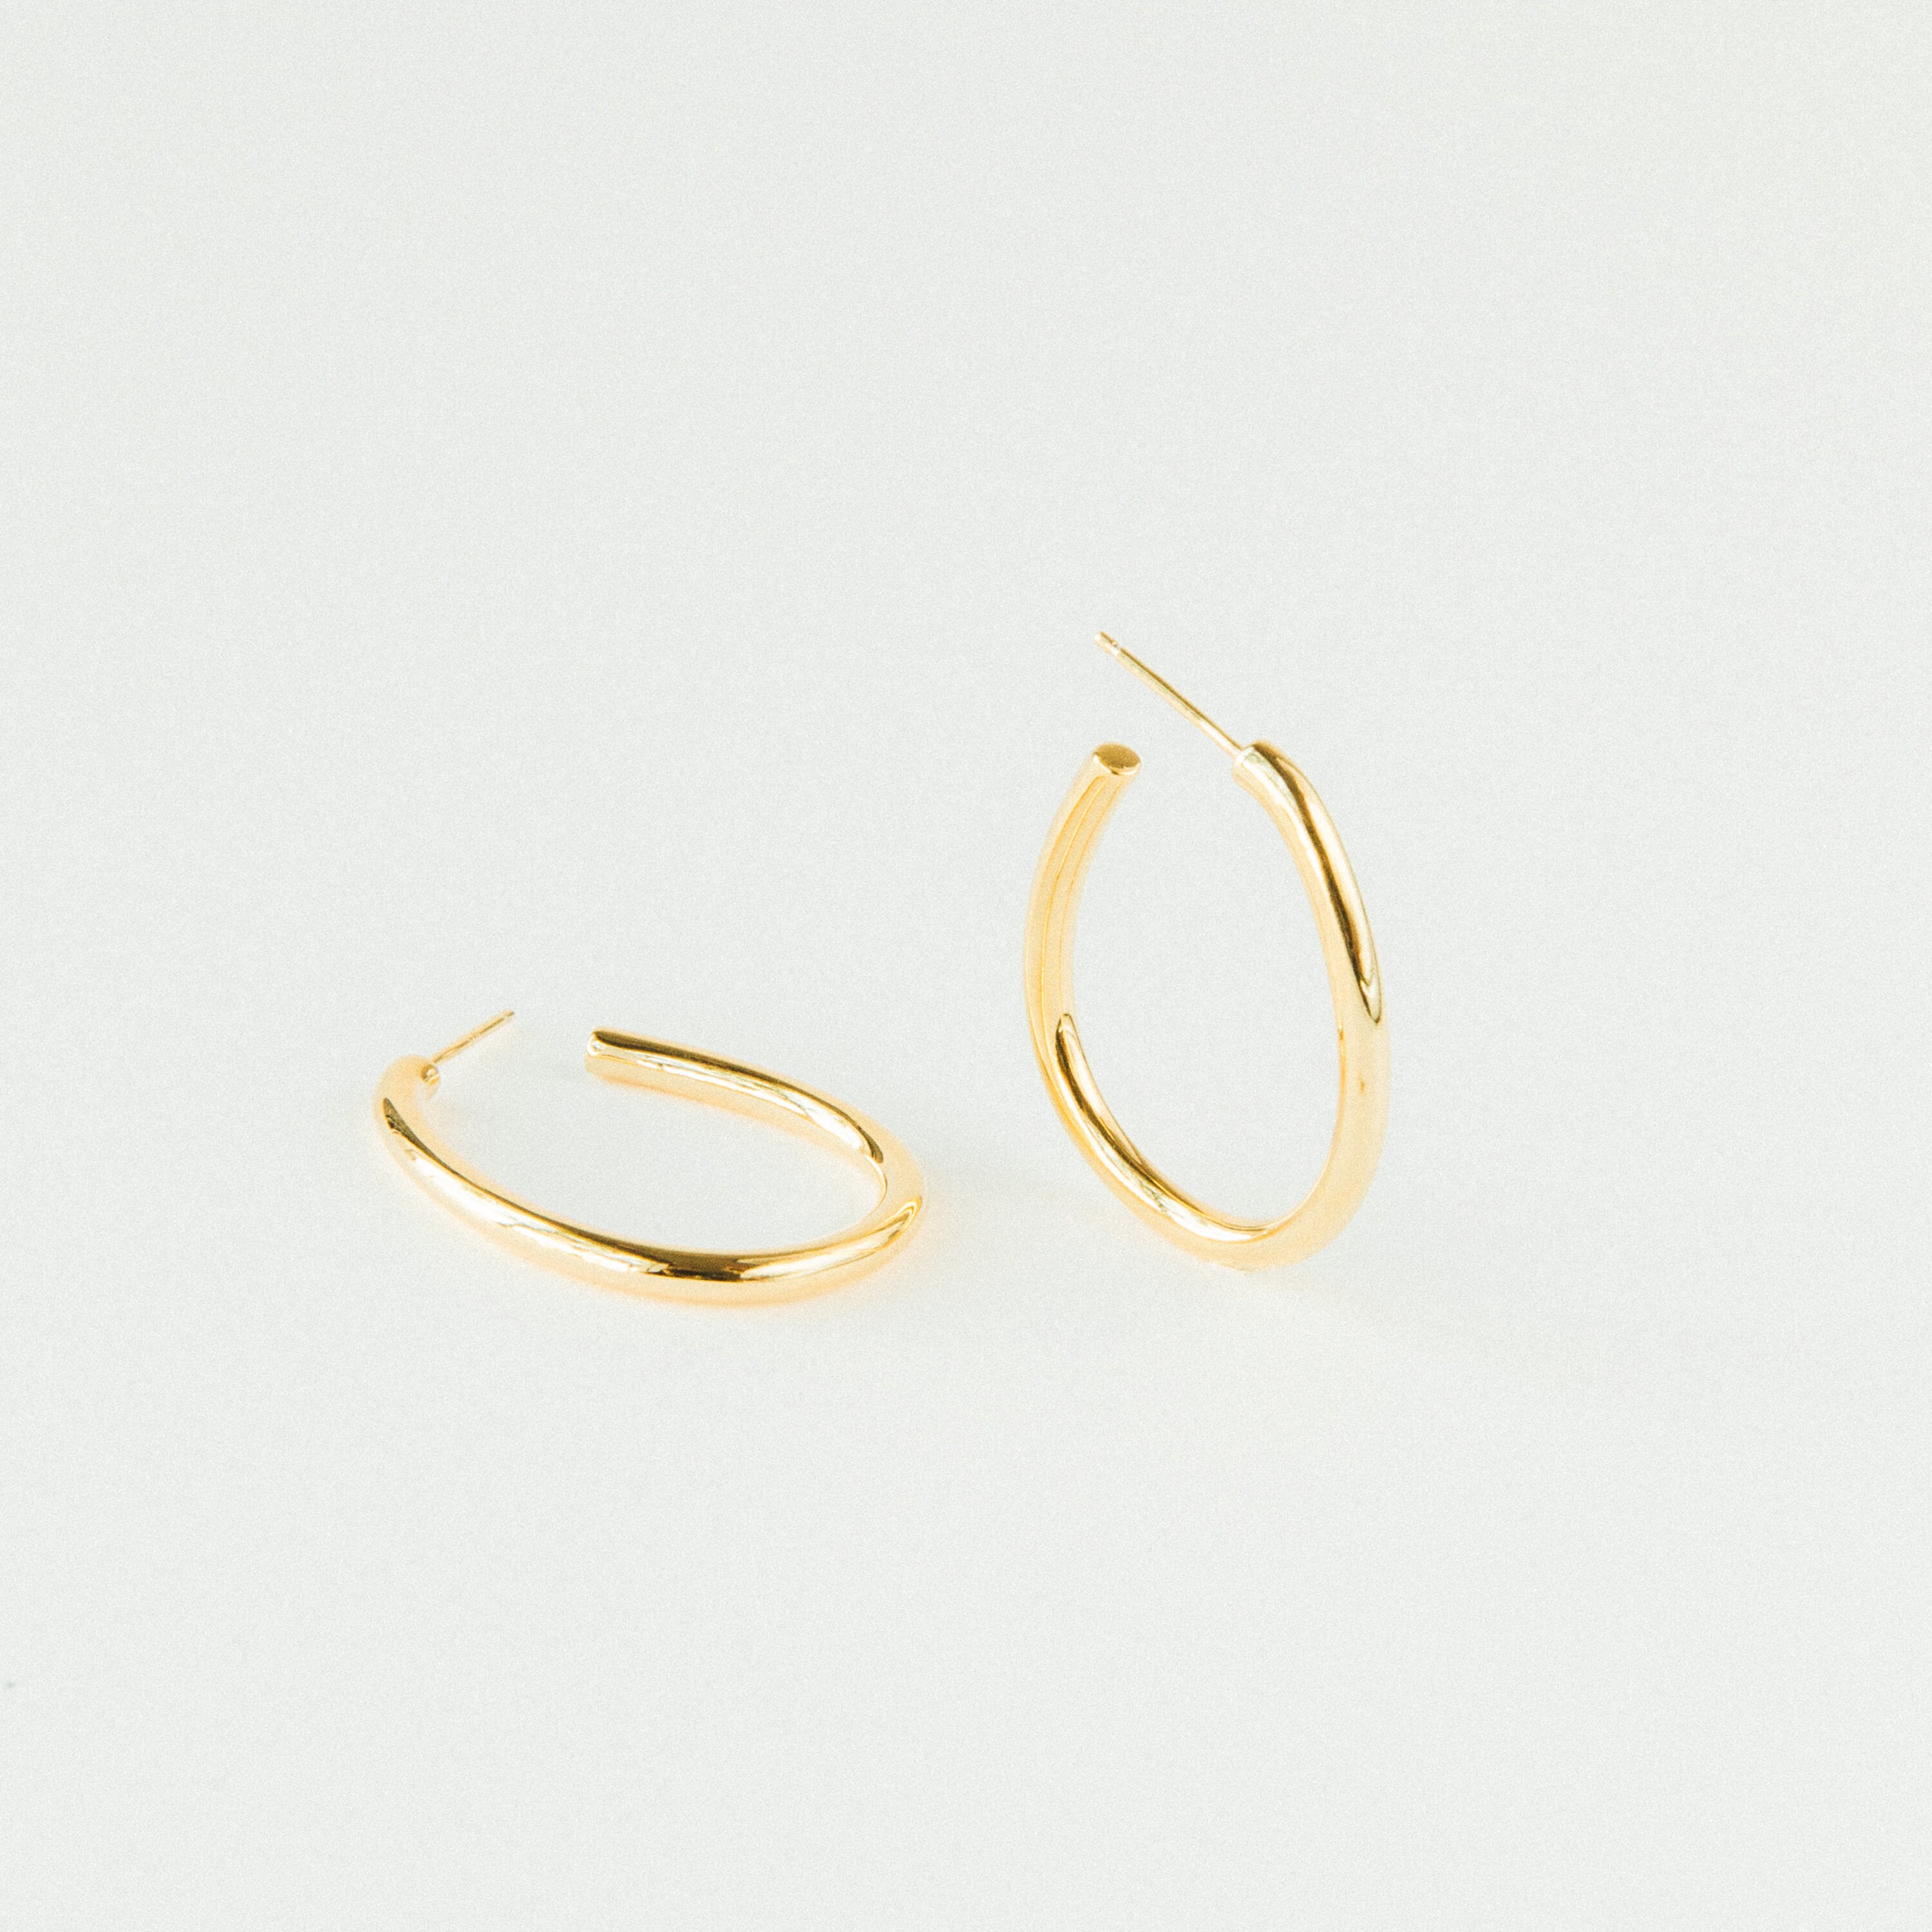 ANINE Oval Hoop Earrings Gold Earrings Hoops Earrings | Etsy